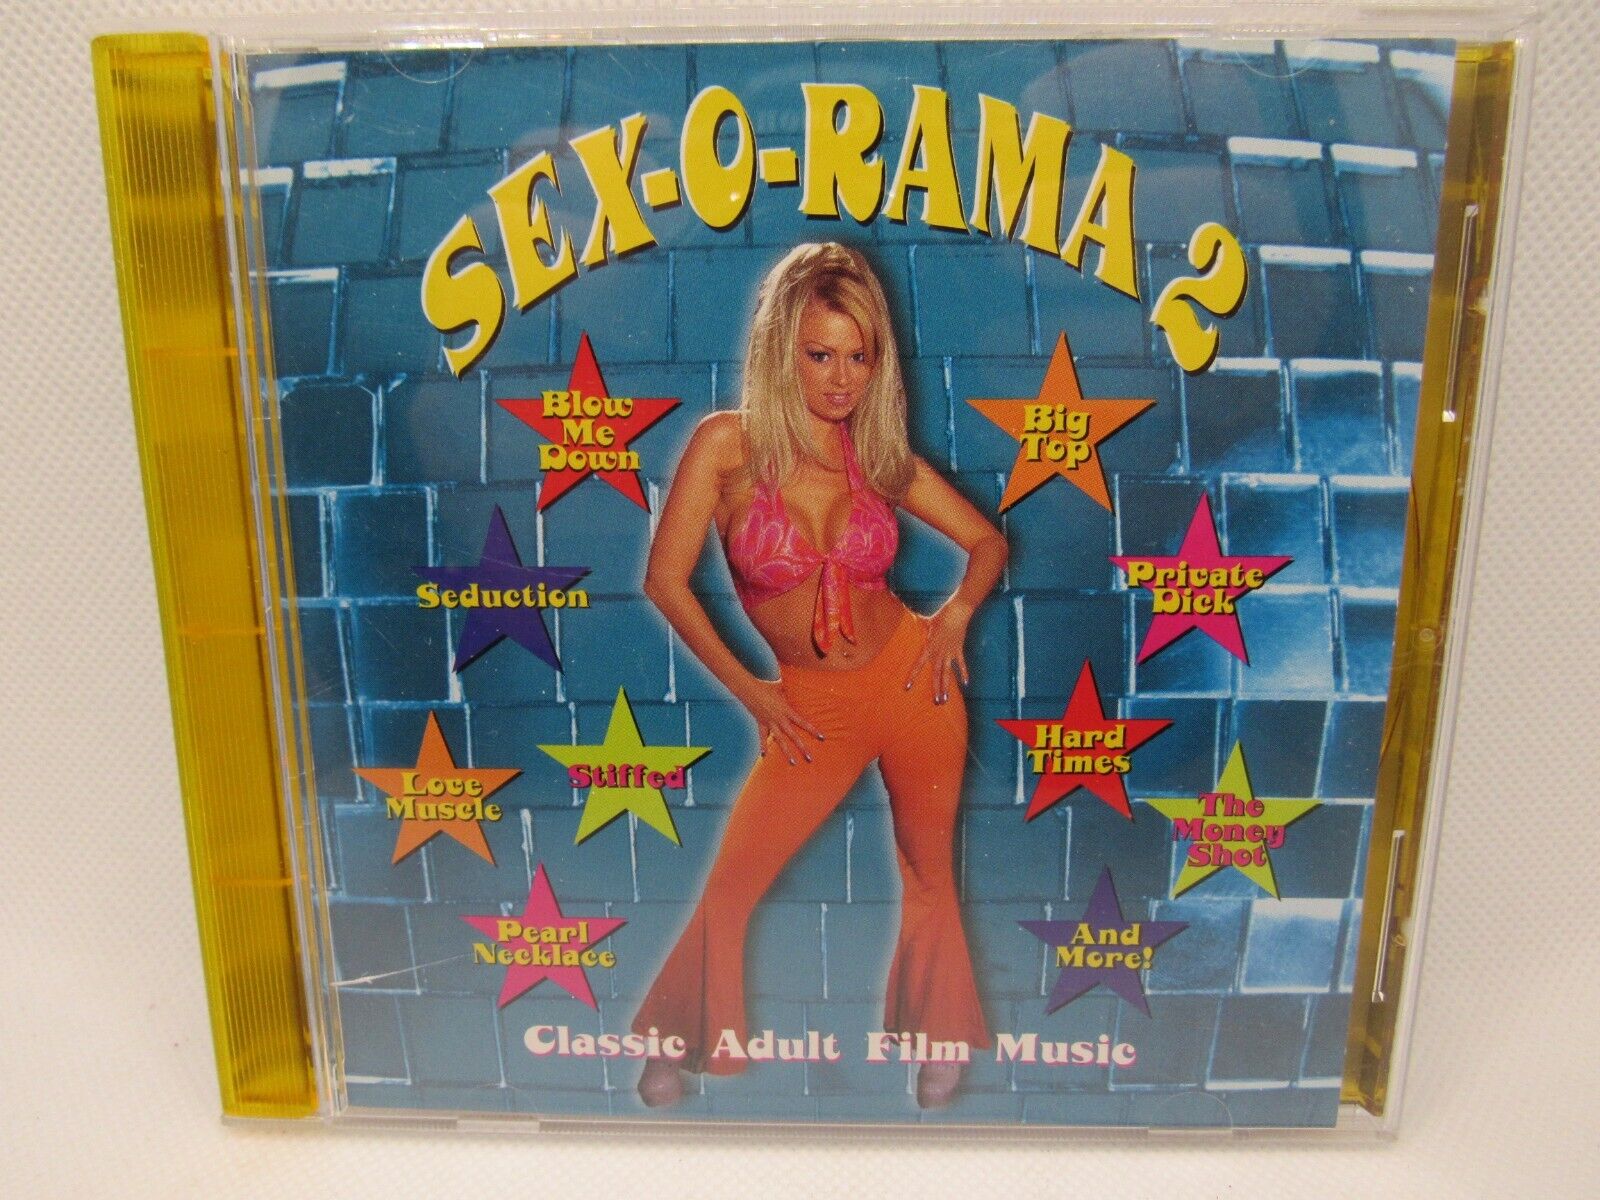 Vintage Sex-O-Rama 2 Classic Adult Film Music Used CD 1998 Tested Works